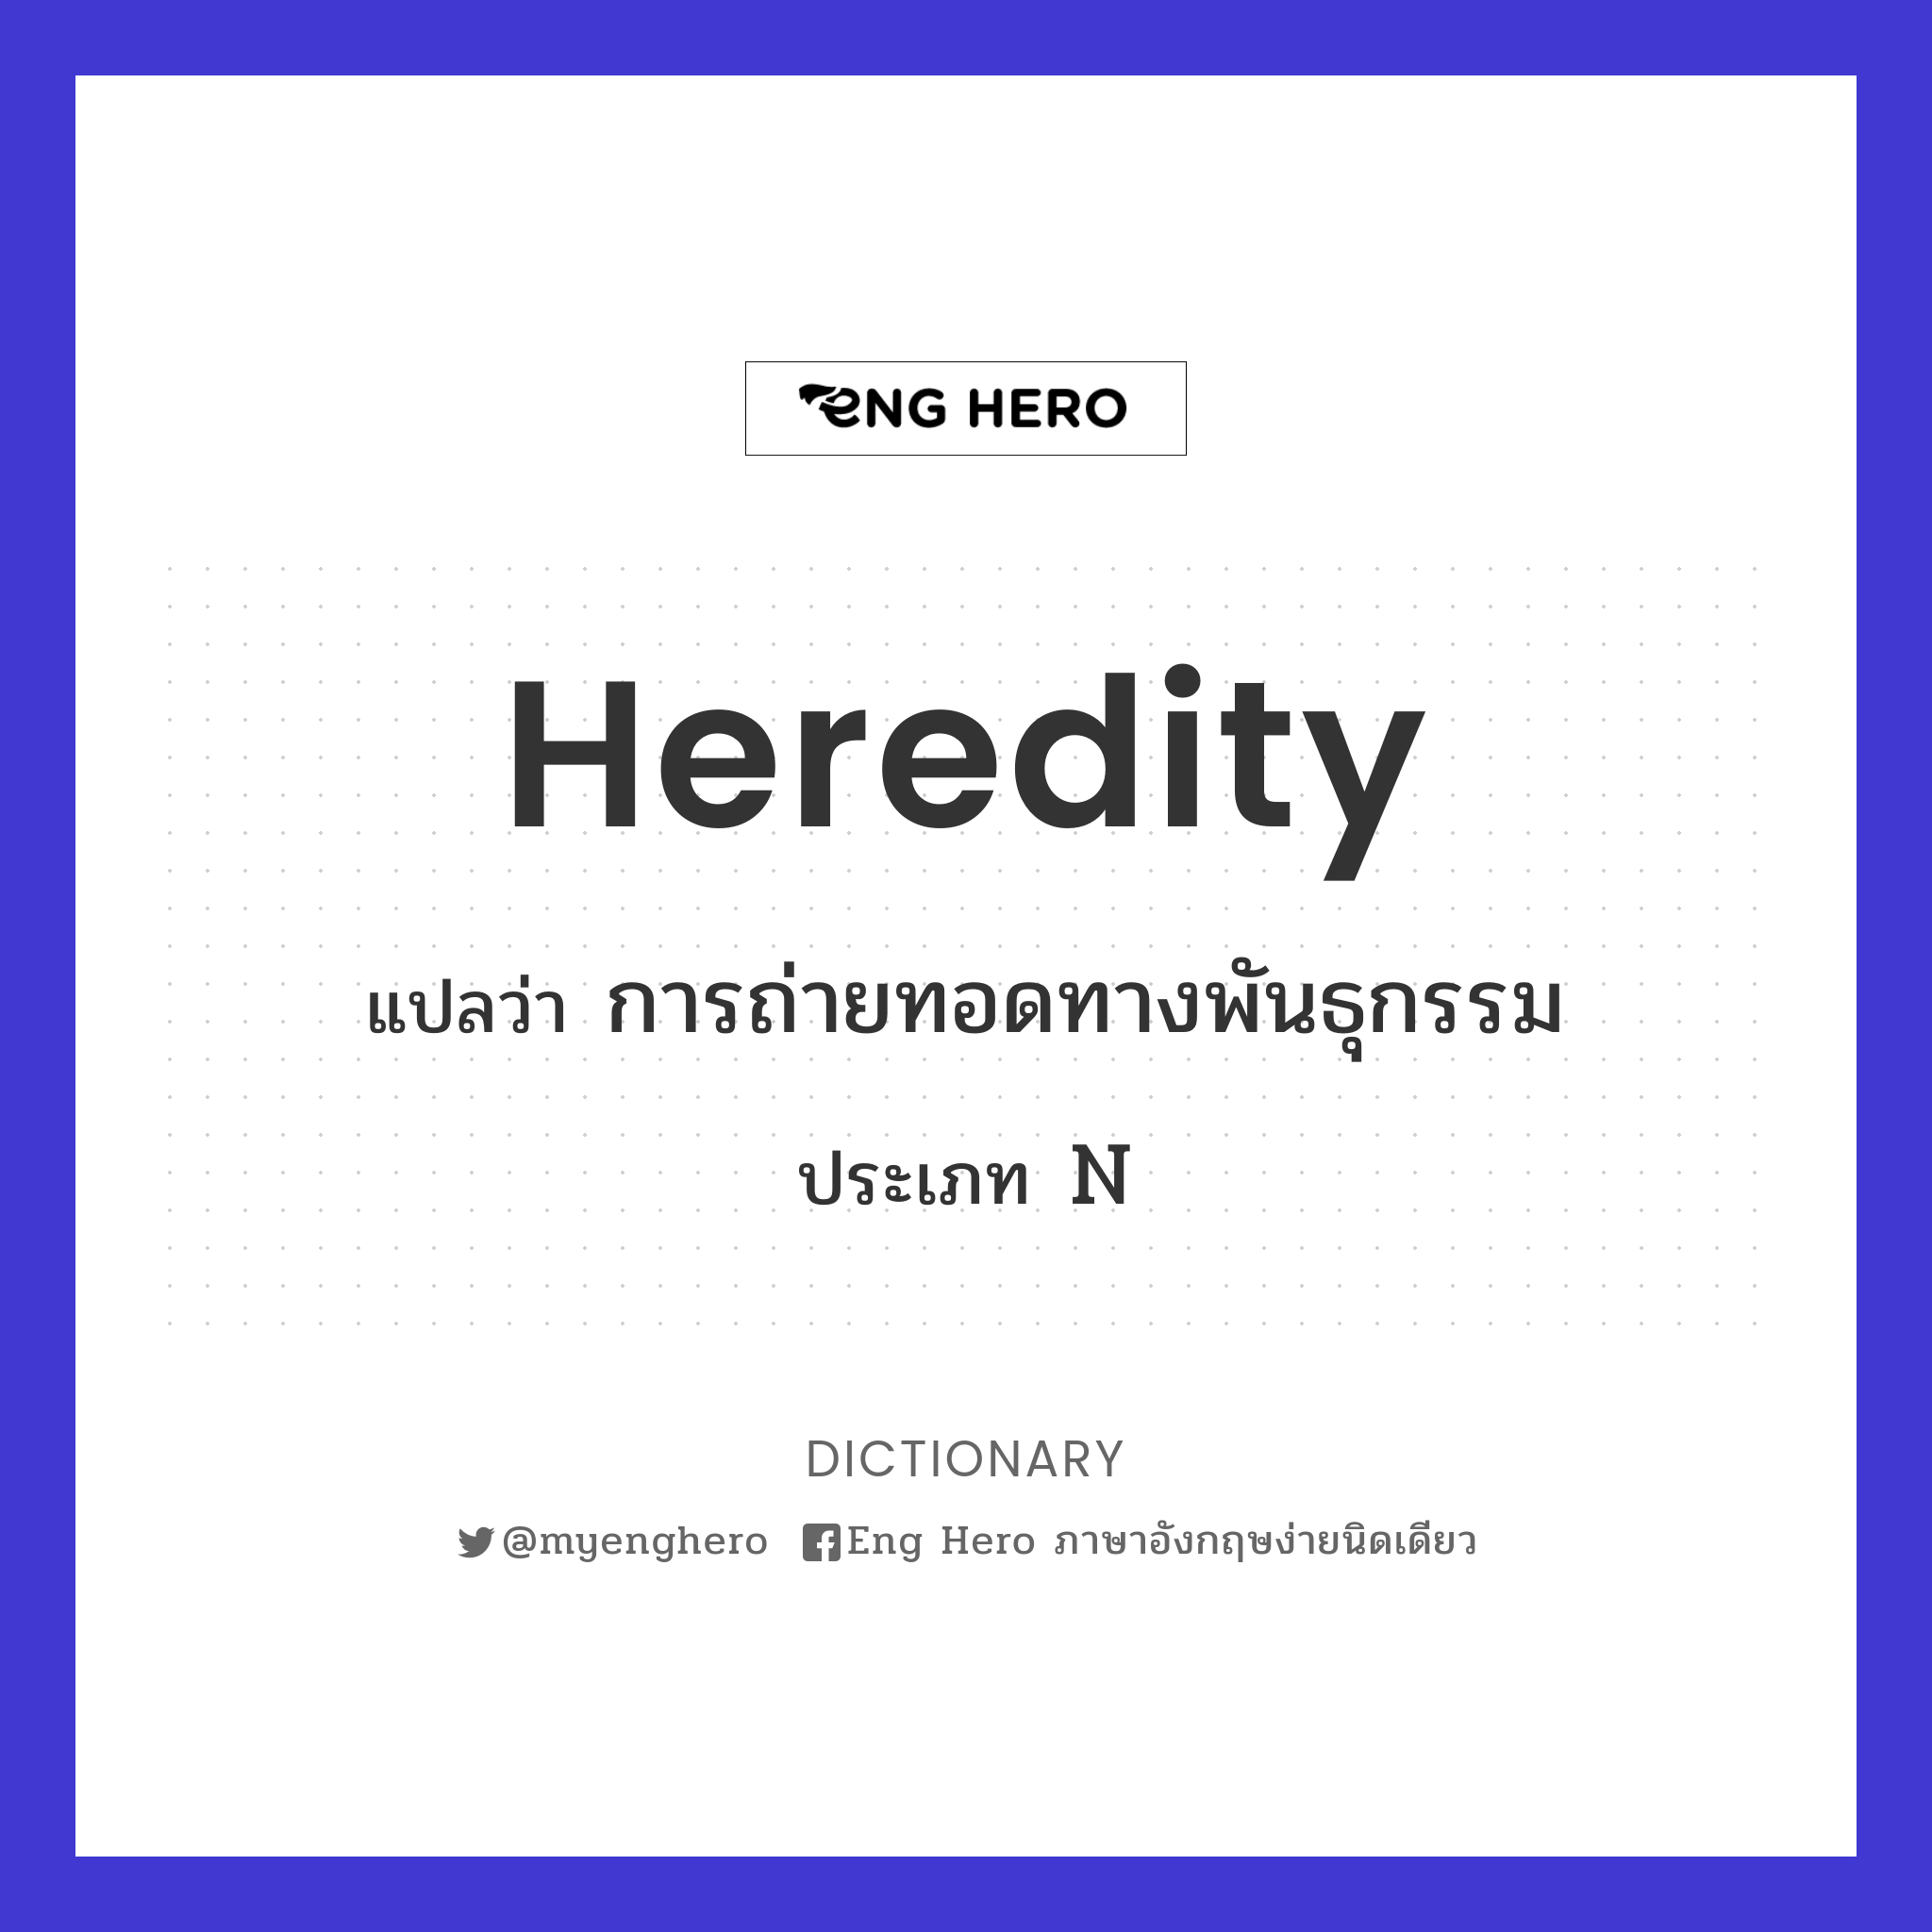 heredity